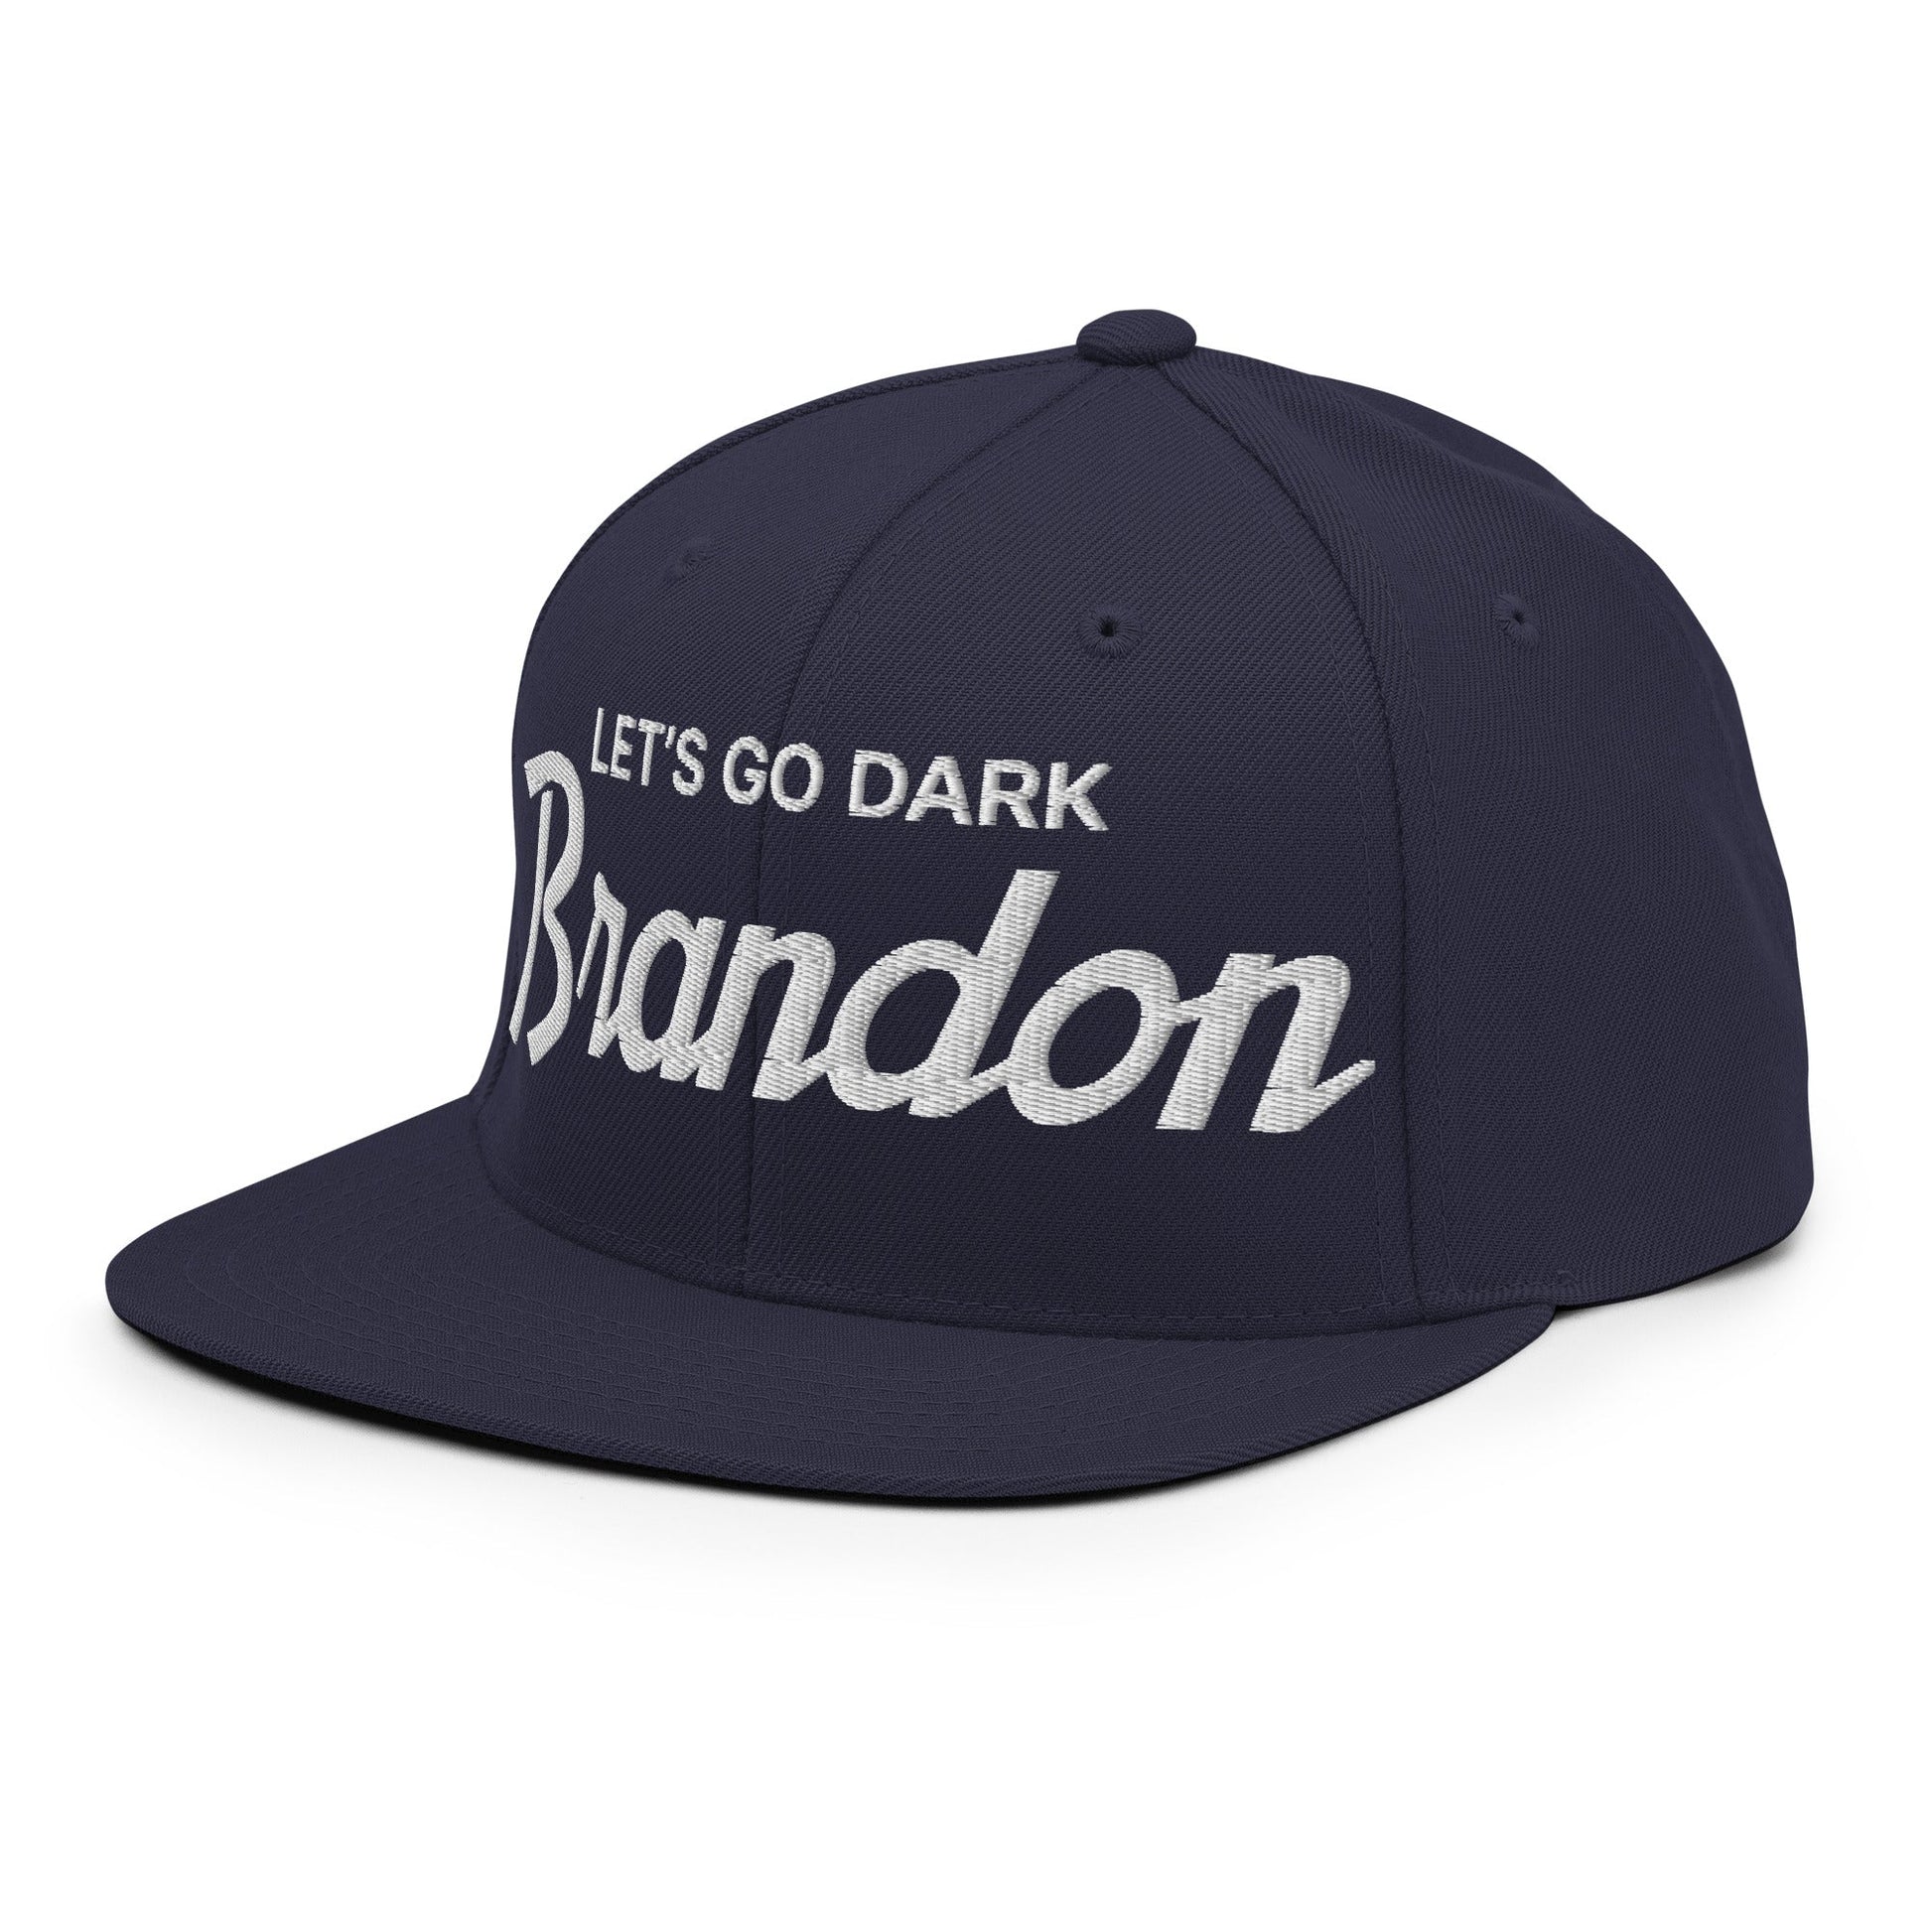 Let's Go Dark Brandon Vintage Sports Script Snapback Hat Navy